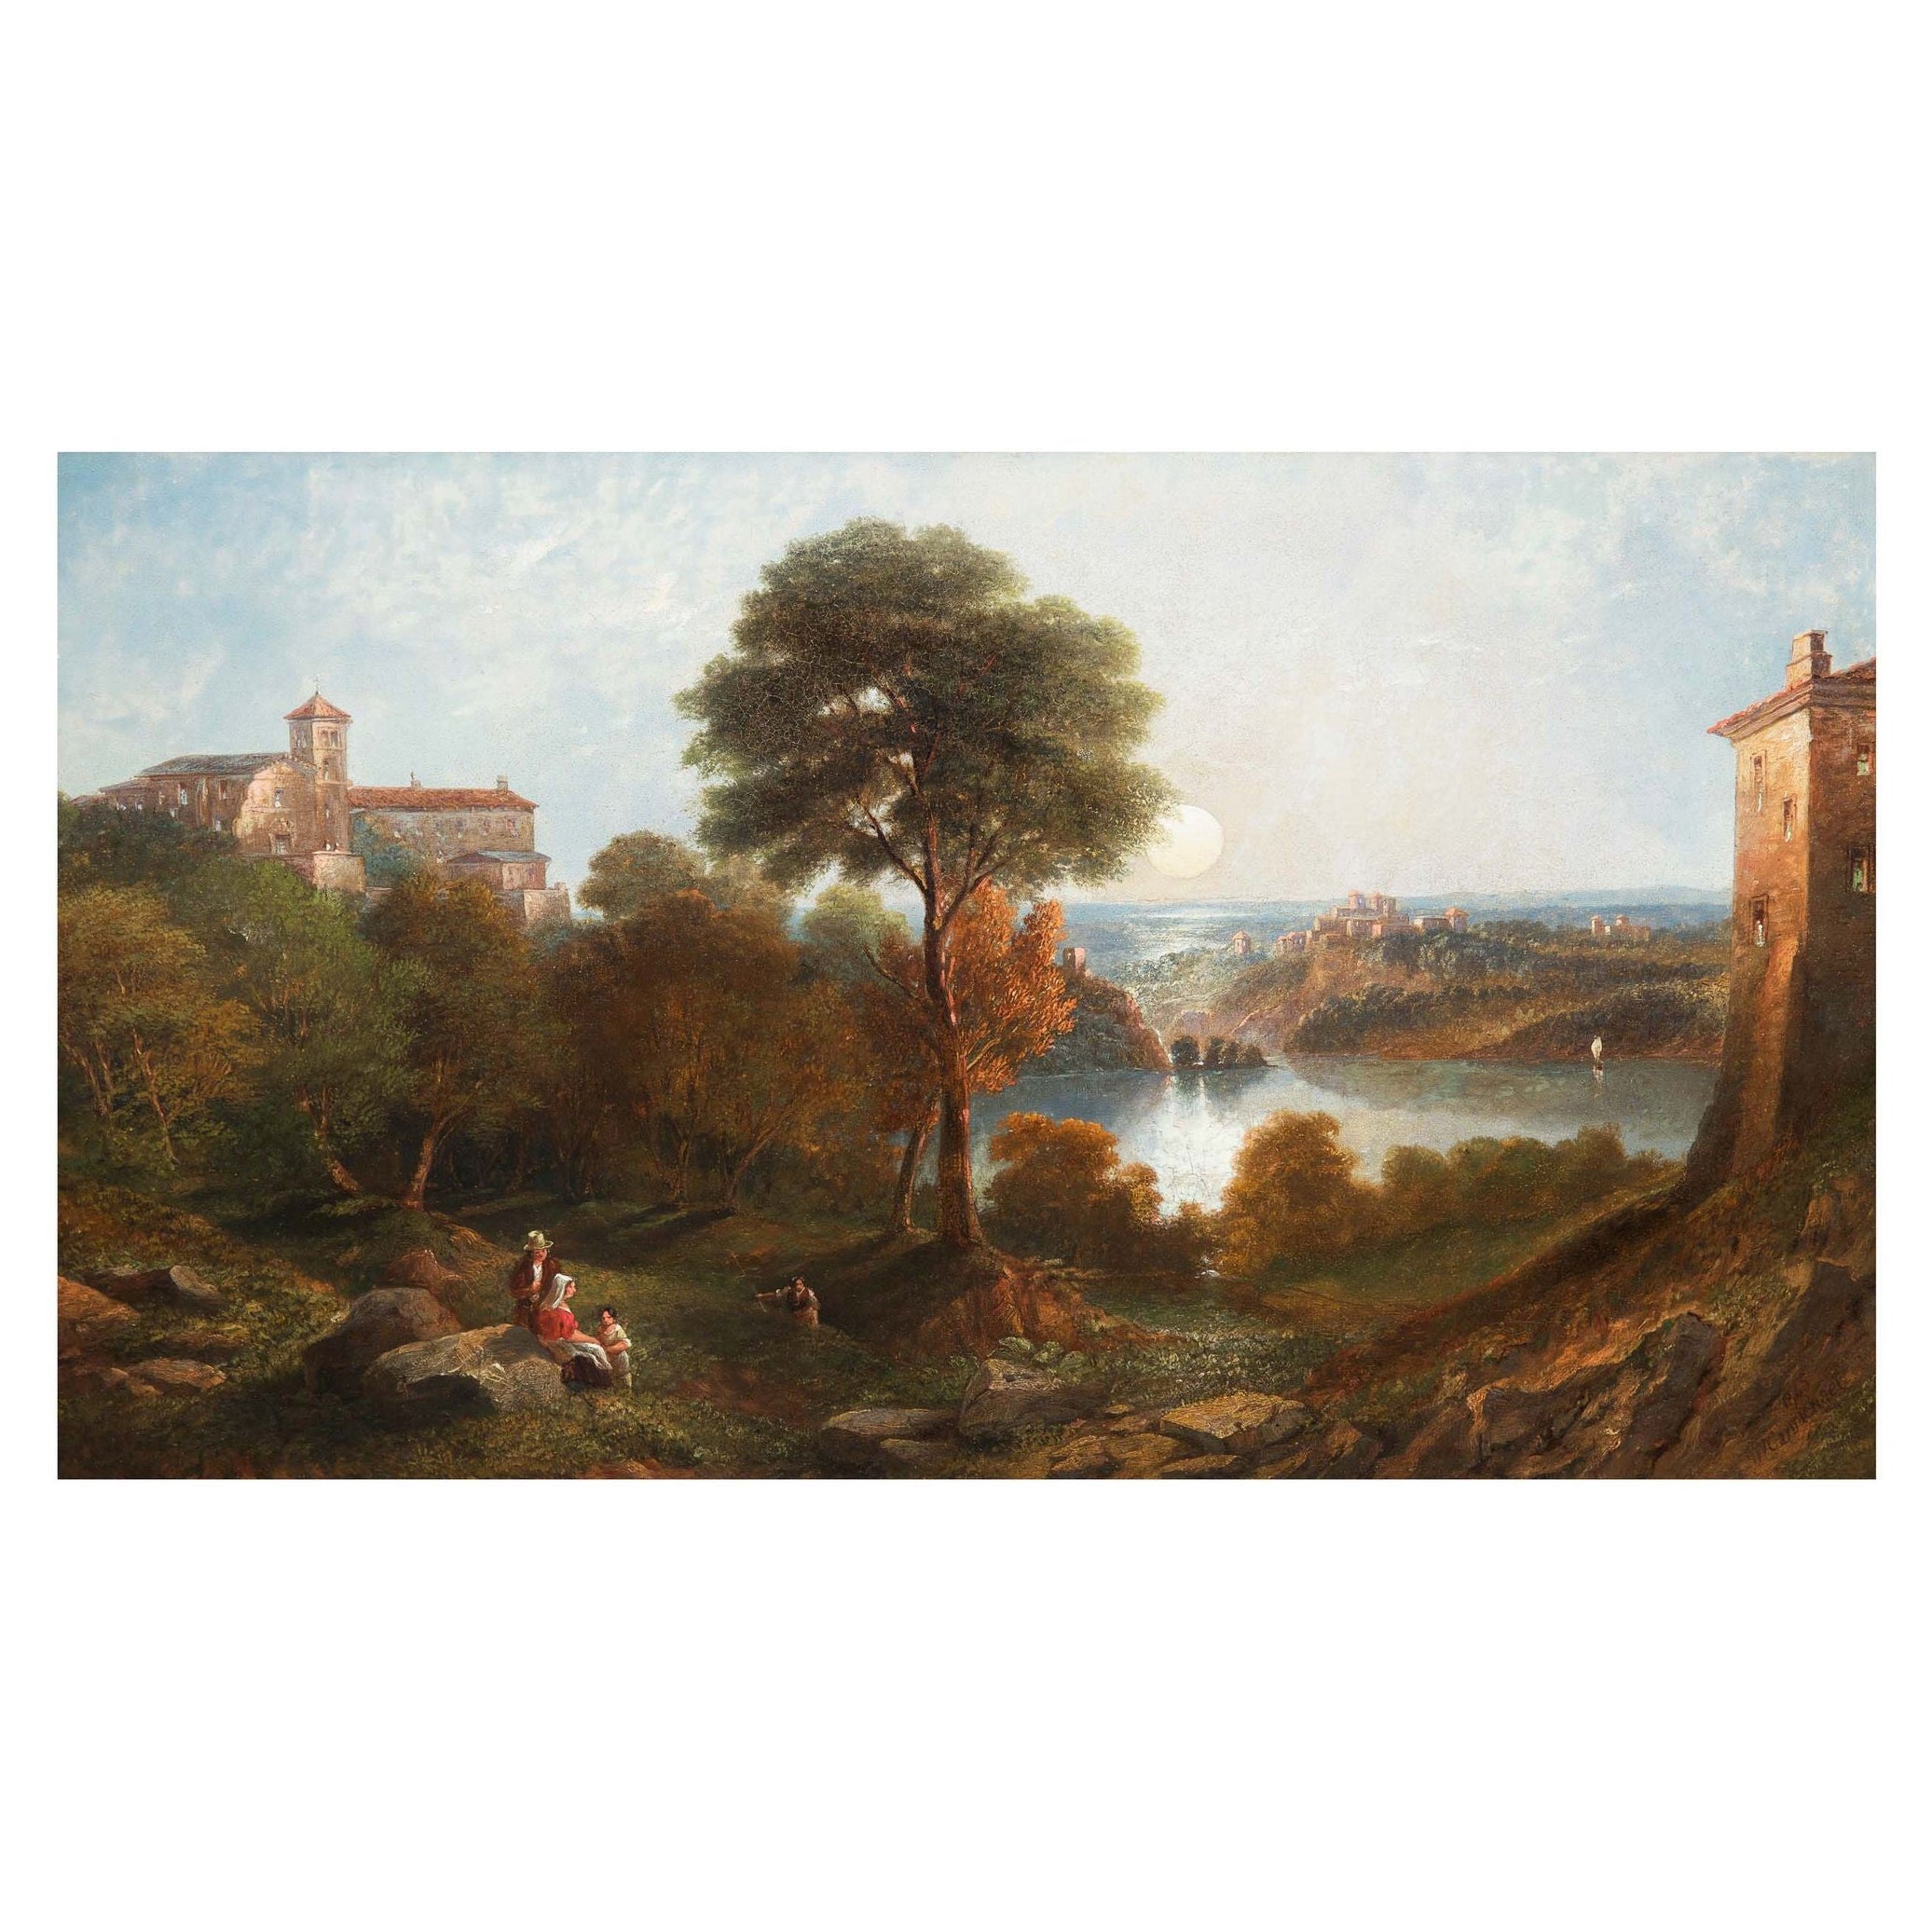 Antique English Painting “Lake Nemi, Italy” '1865' by John Wilson Carmichael